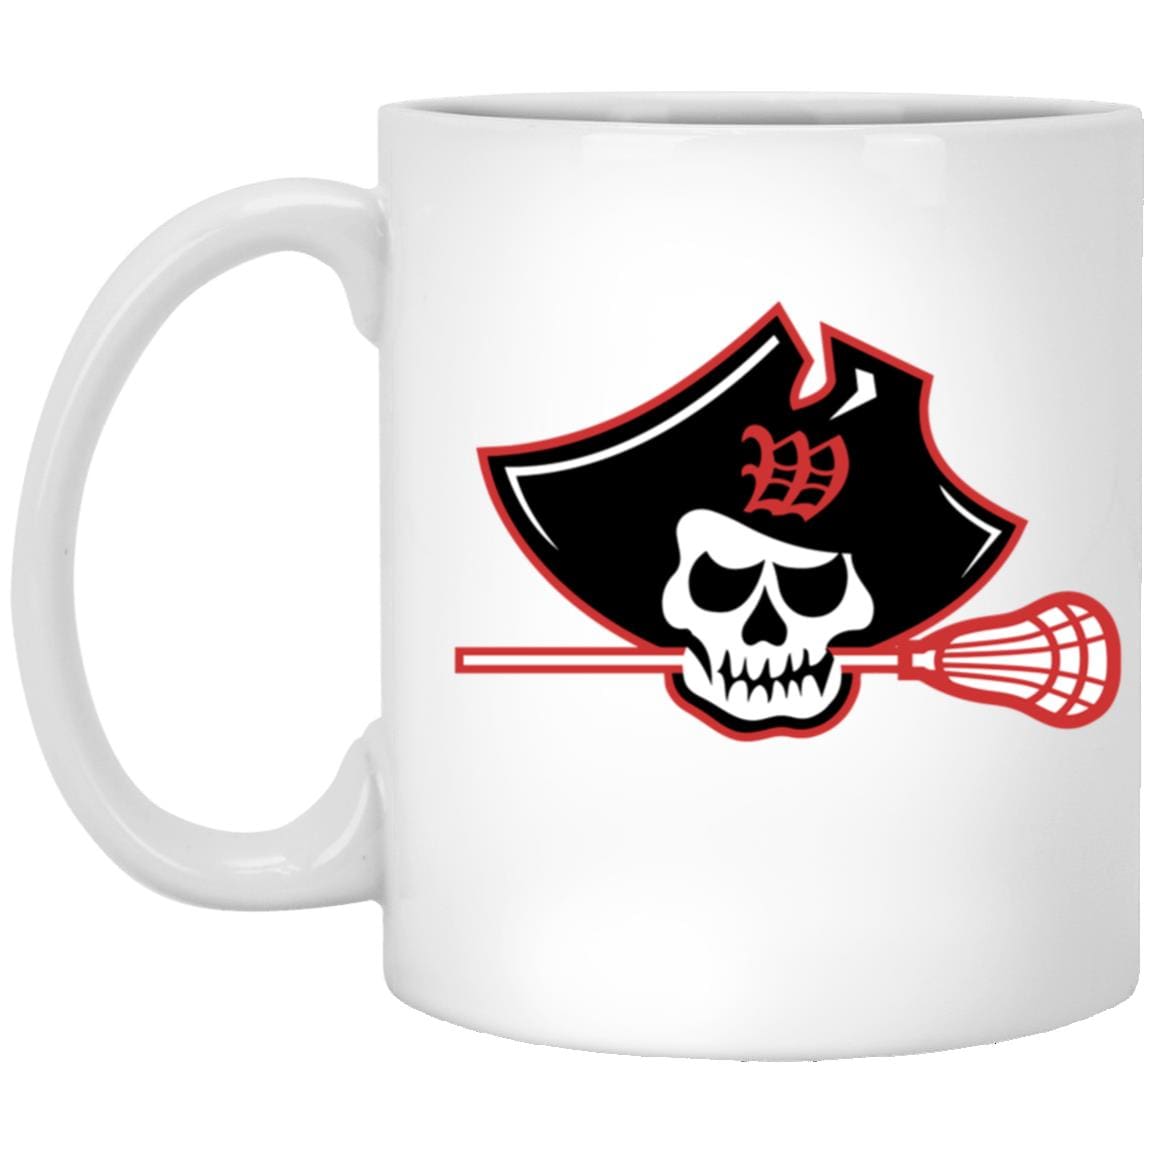 Wellesley Lacrosse Coffee Mug Signature Lacrosse